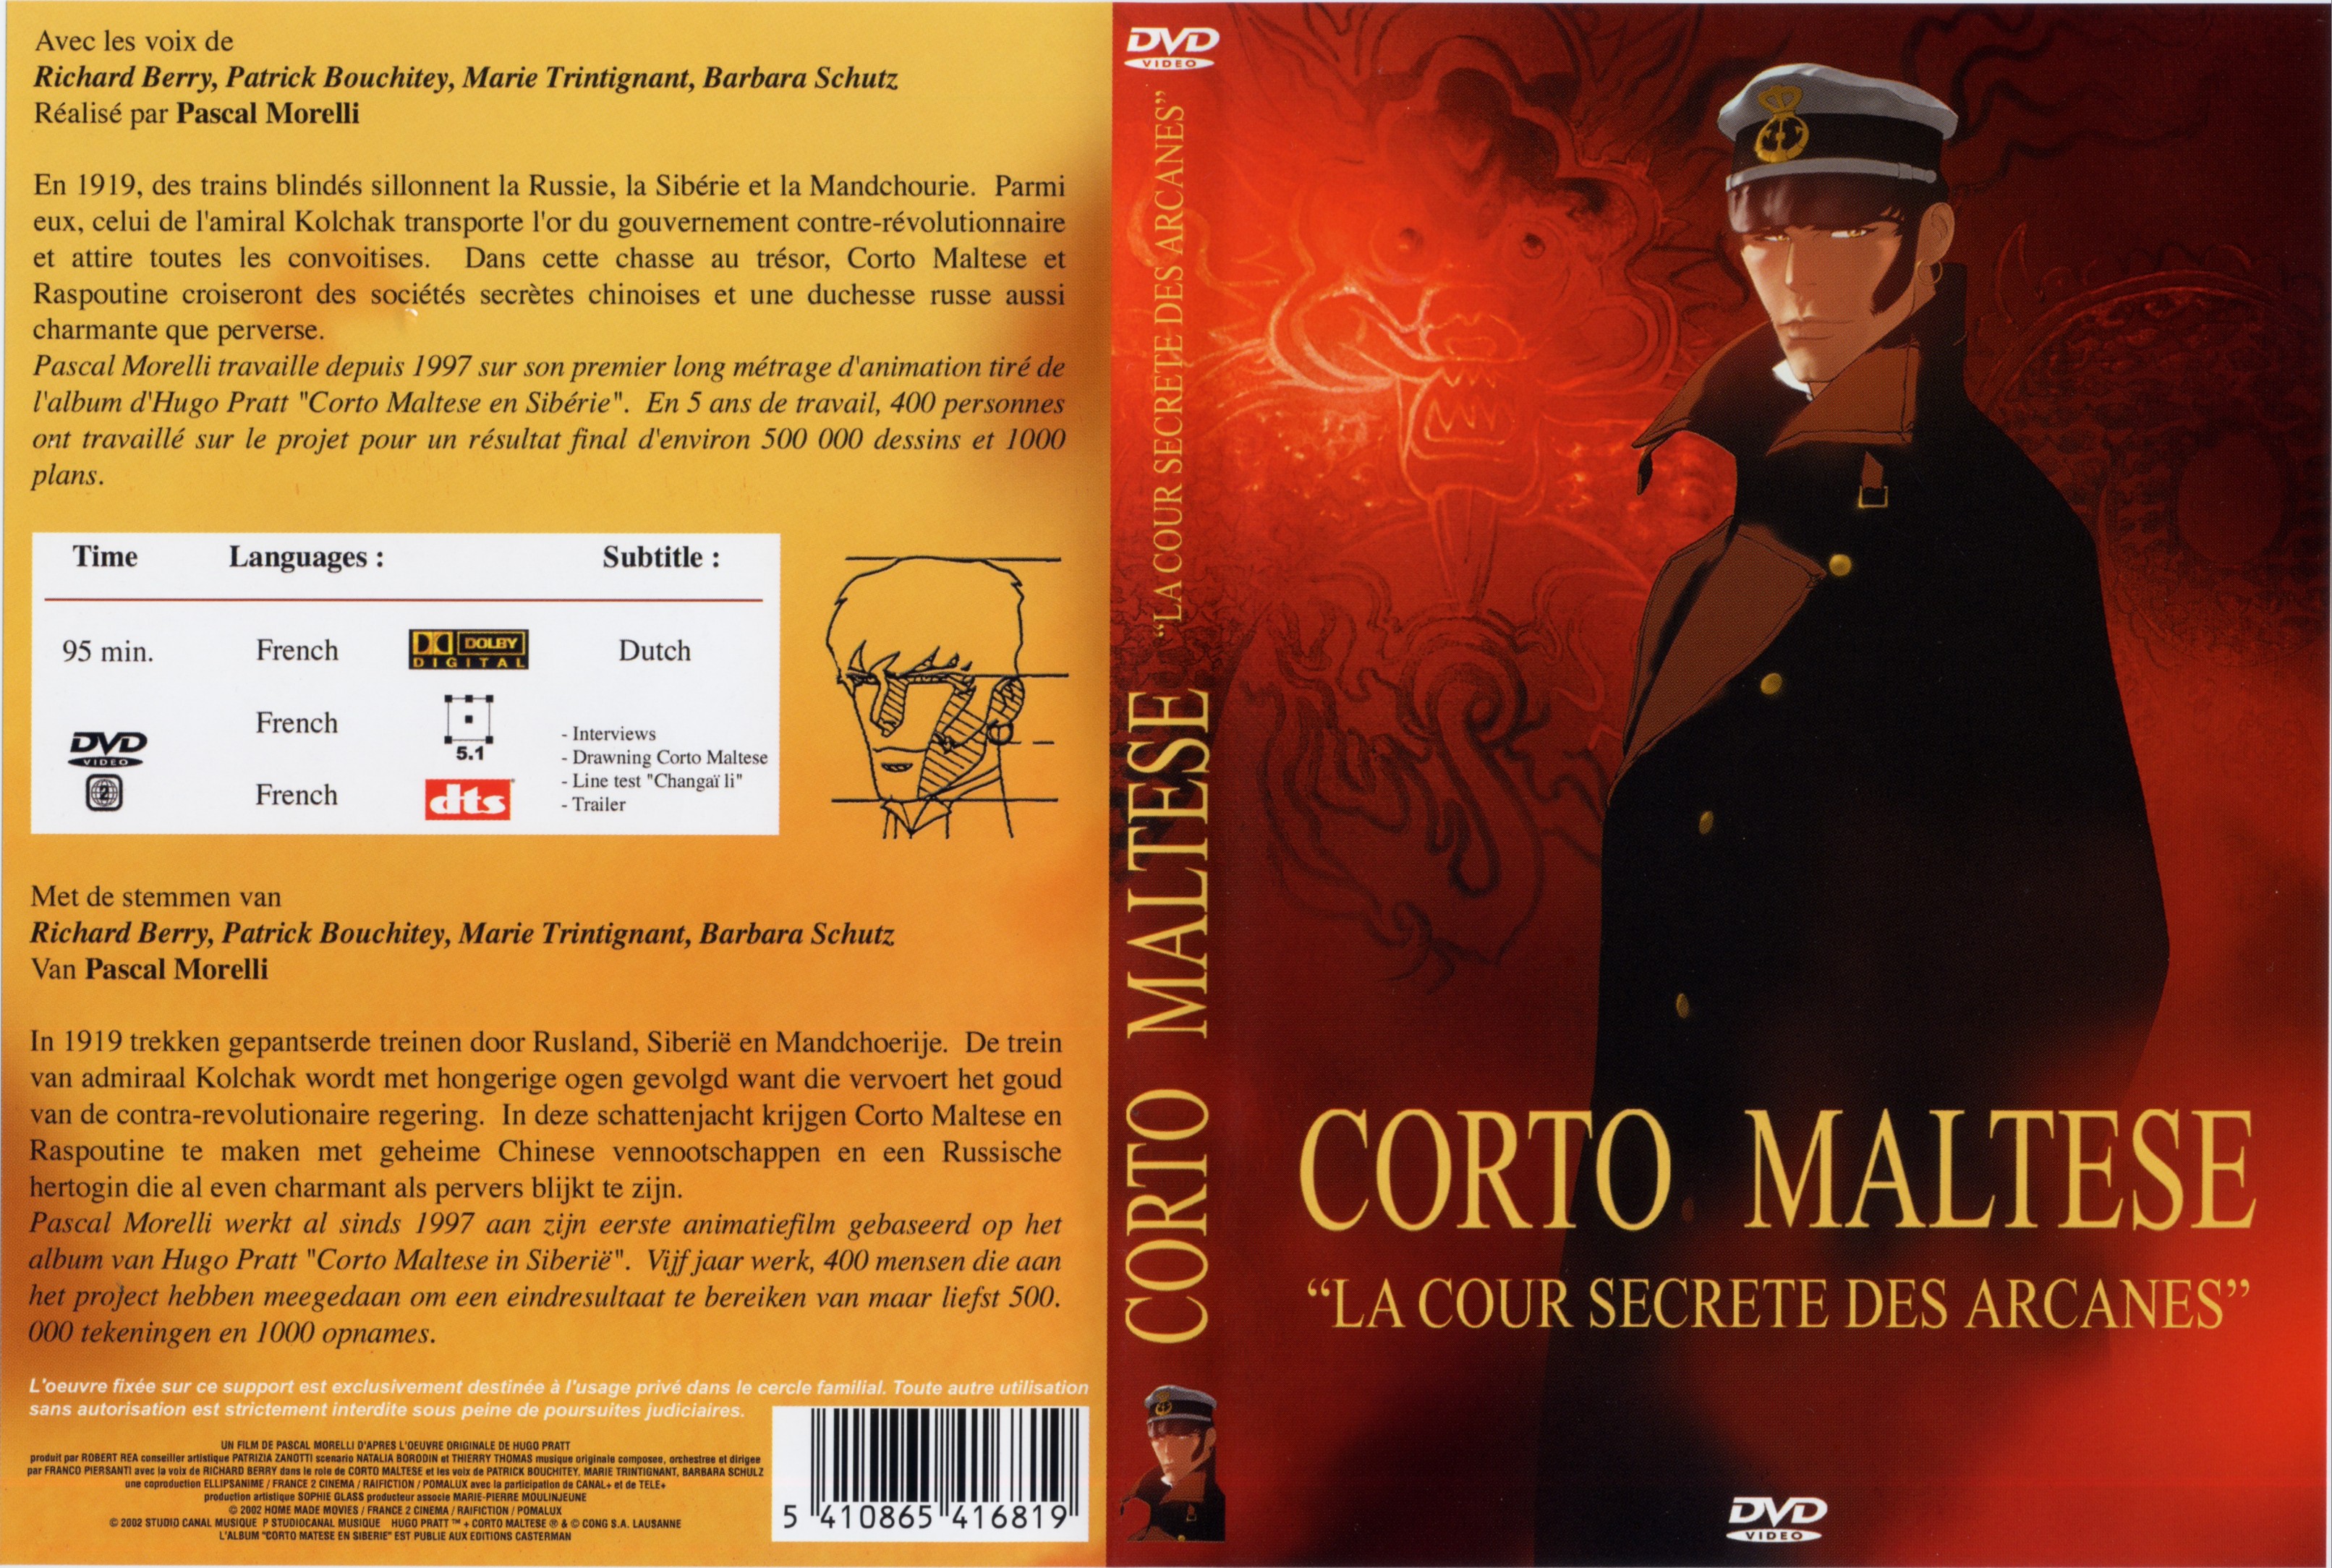 Jaquette DVD Corto Maltese - la cour secrete des arcanes v2